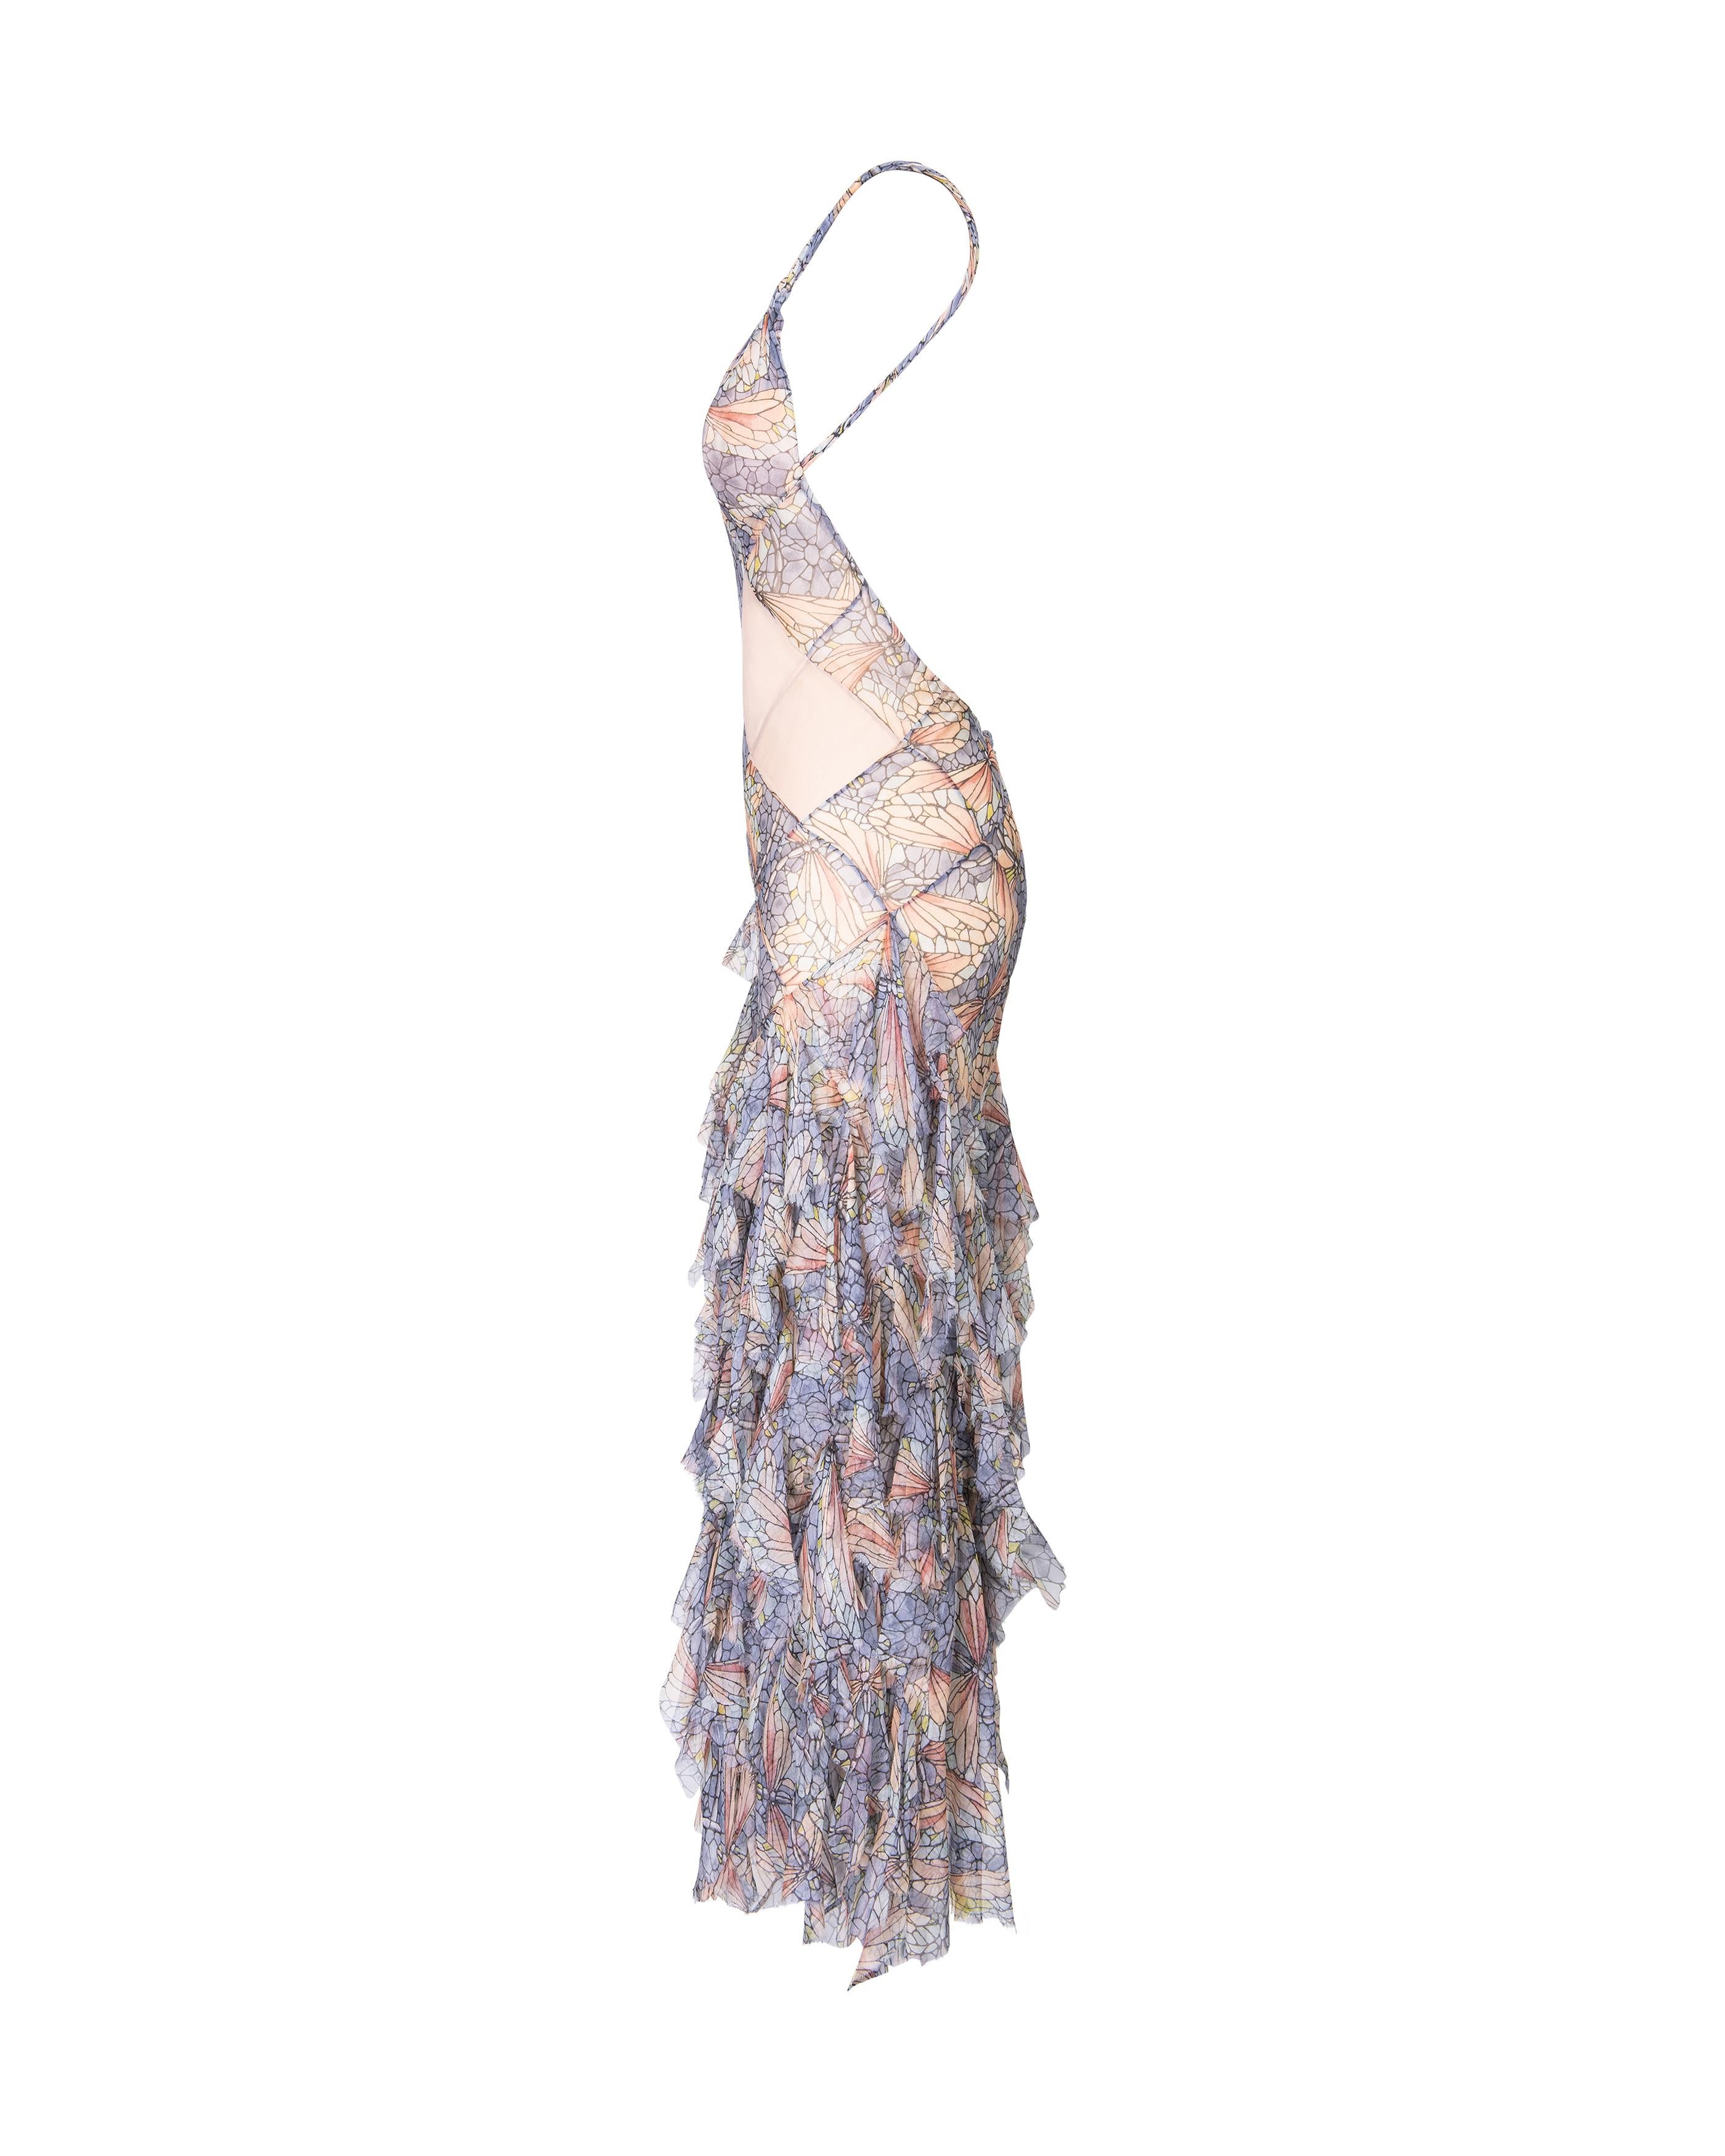 Women's S/S 2004 Lifetime Lee Alexander McQueen Stained Glass Silk Chiffon Flutter Gown